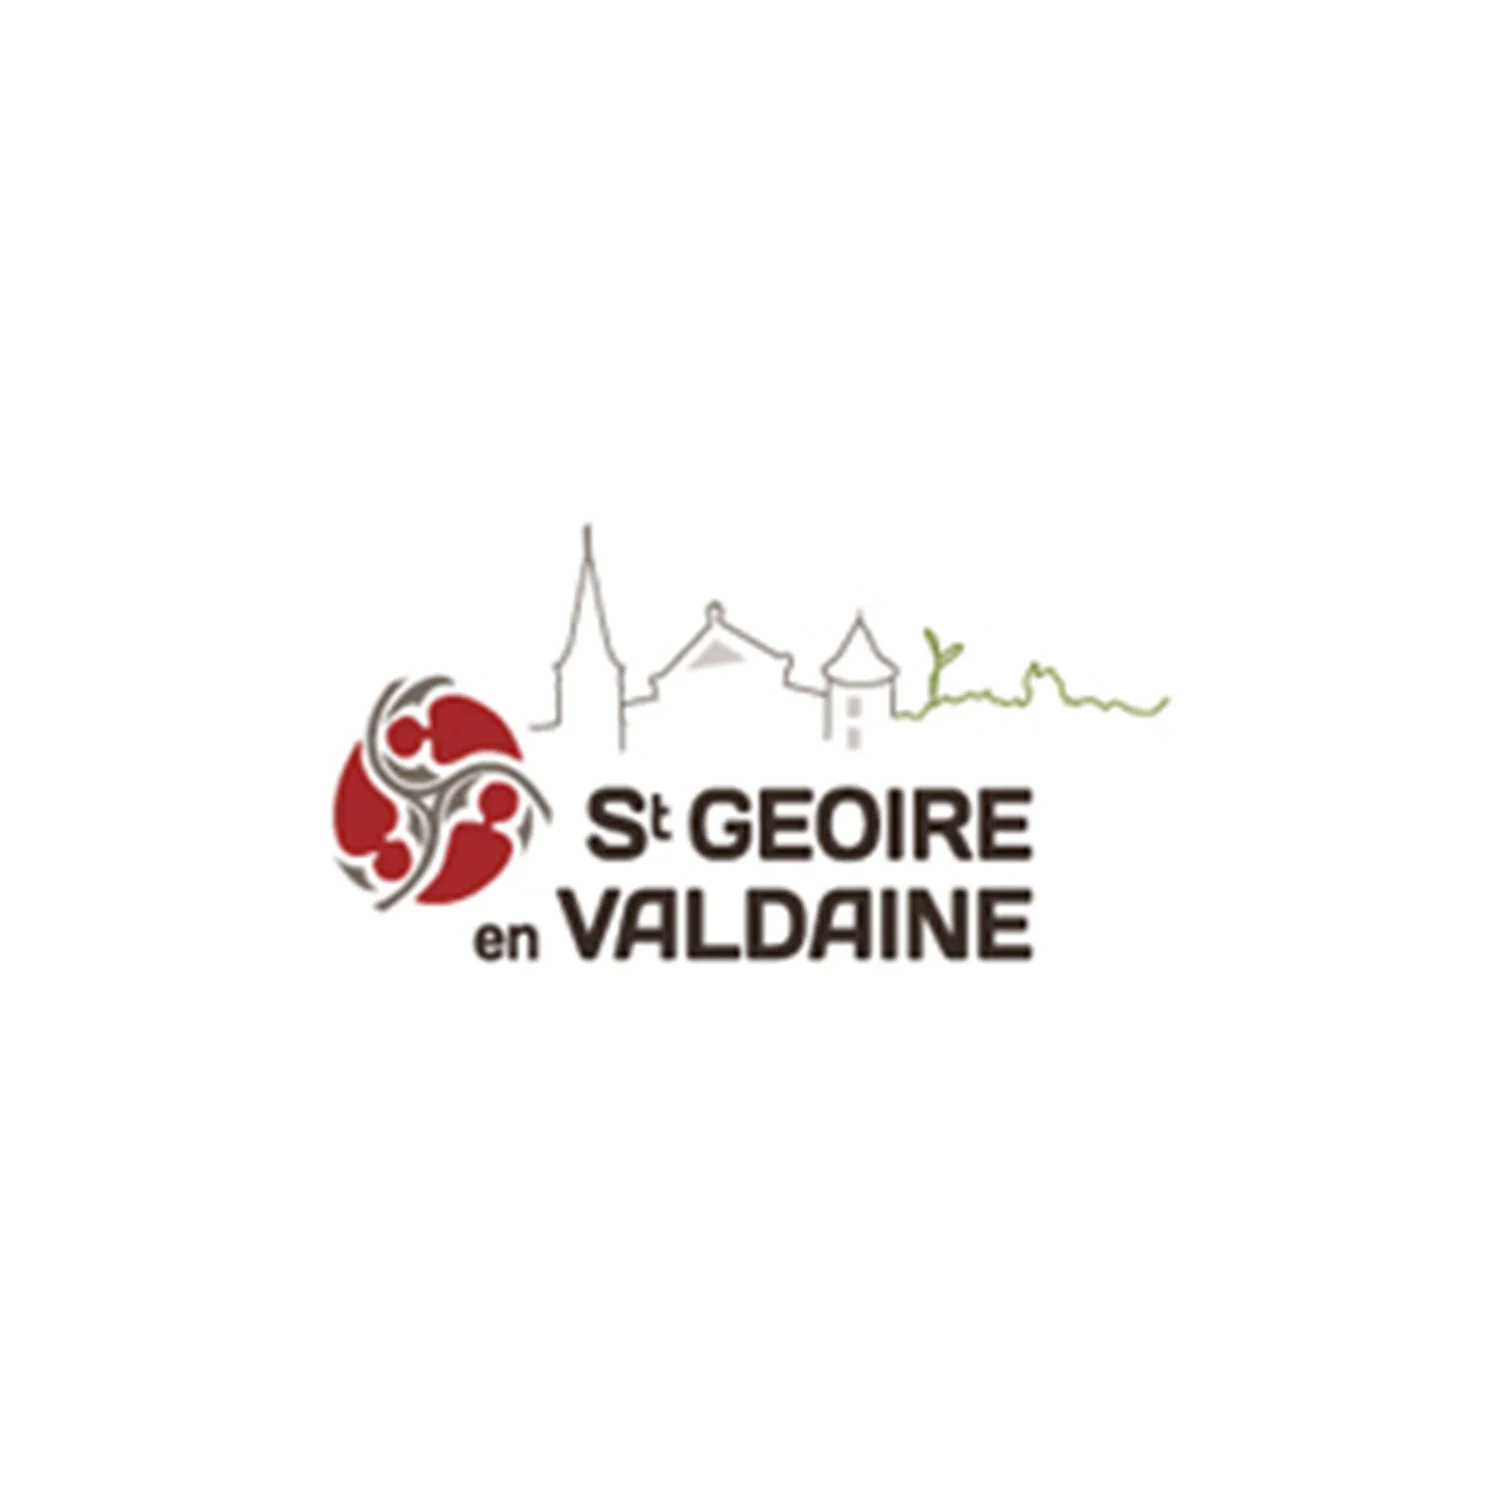 Mairie Saint Geoire en Valdaine